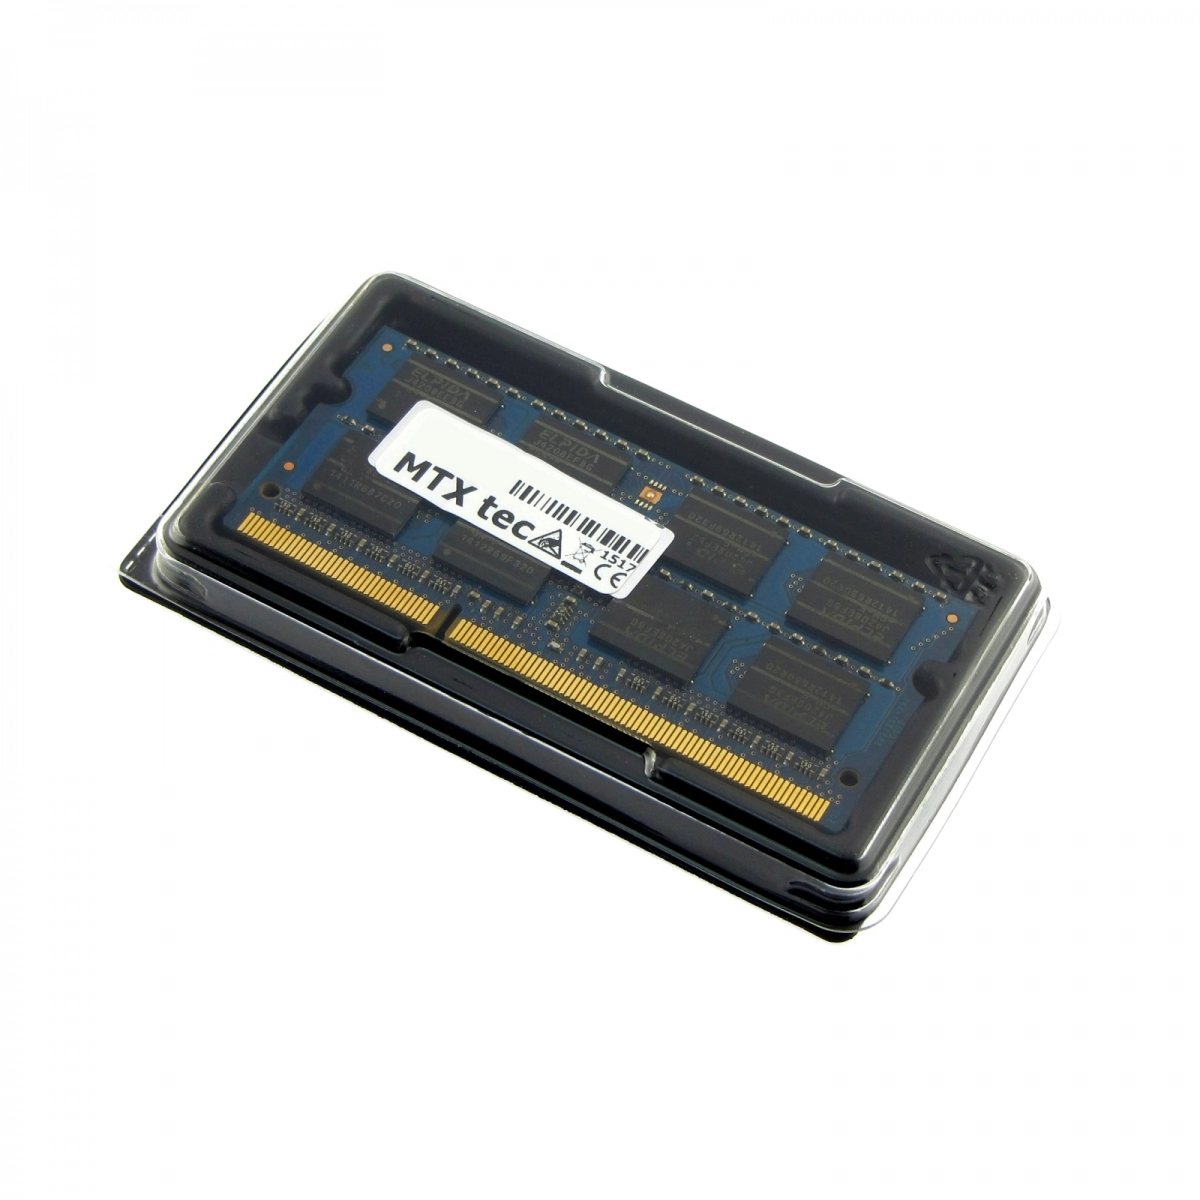 MTXtec Arbeitsspeicher 4 GB RAM für LENOVO ThinkPad T500 (2081)